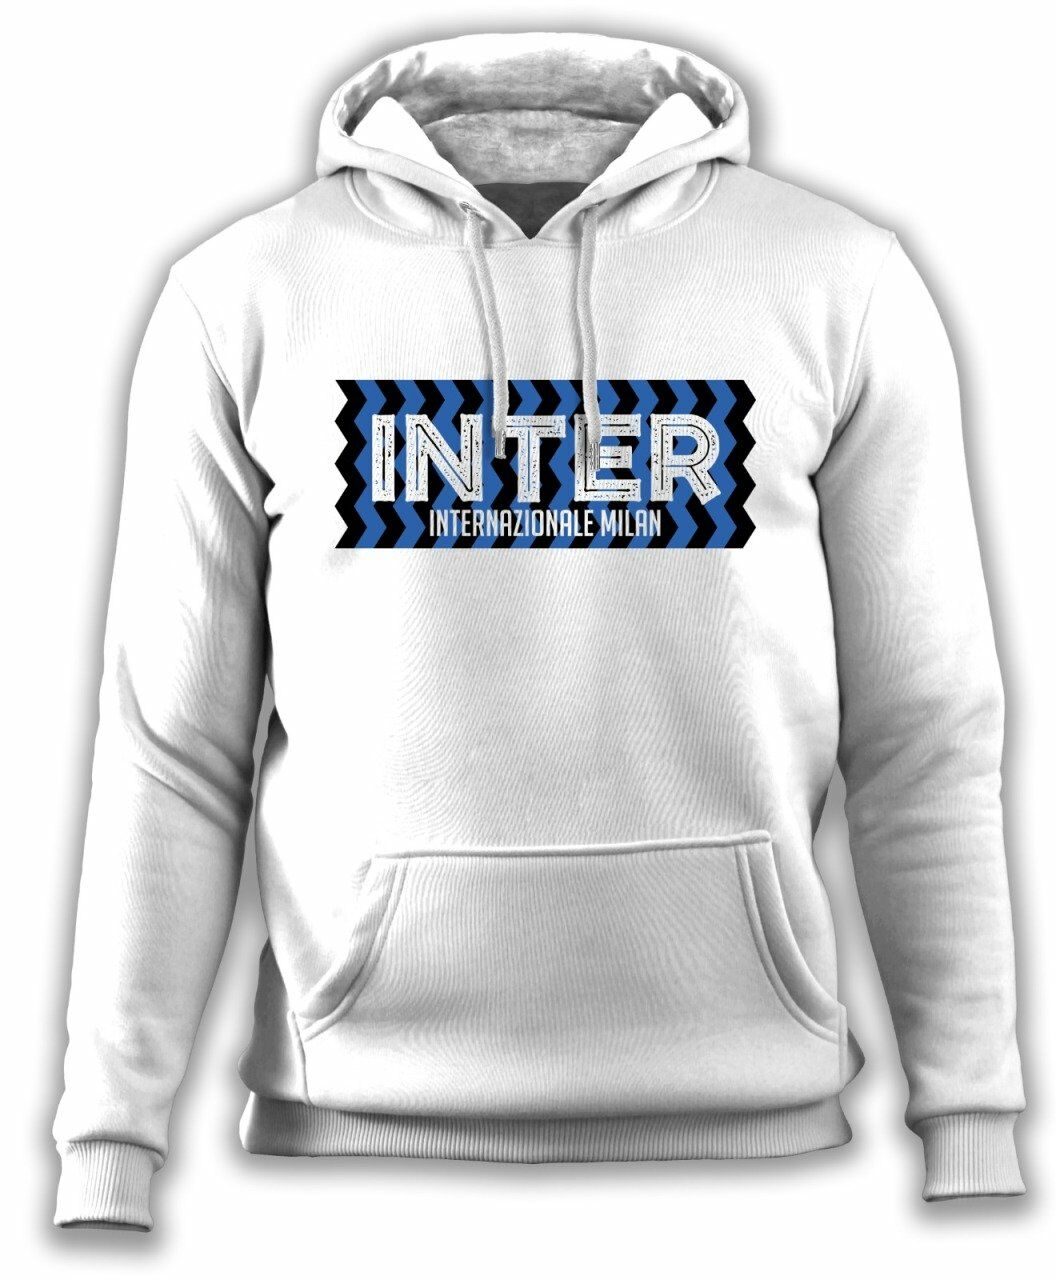 Inter - Internazionale Milan Sweatshirt